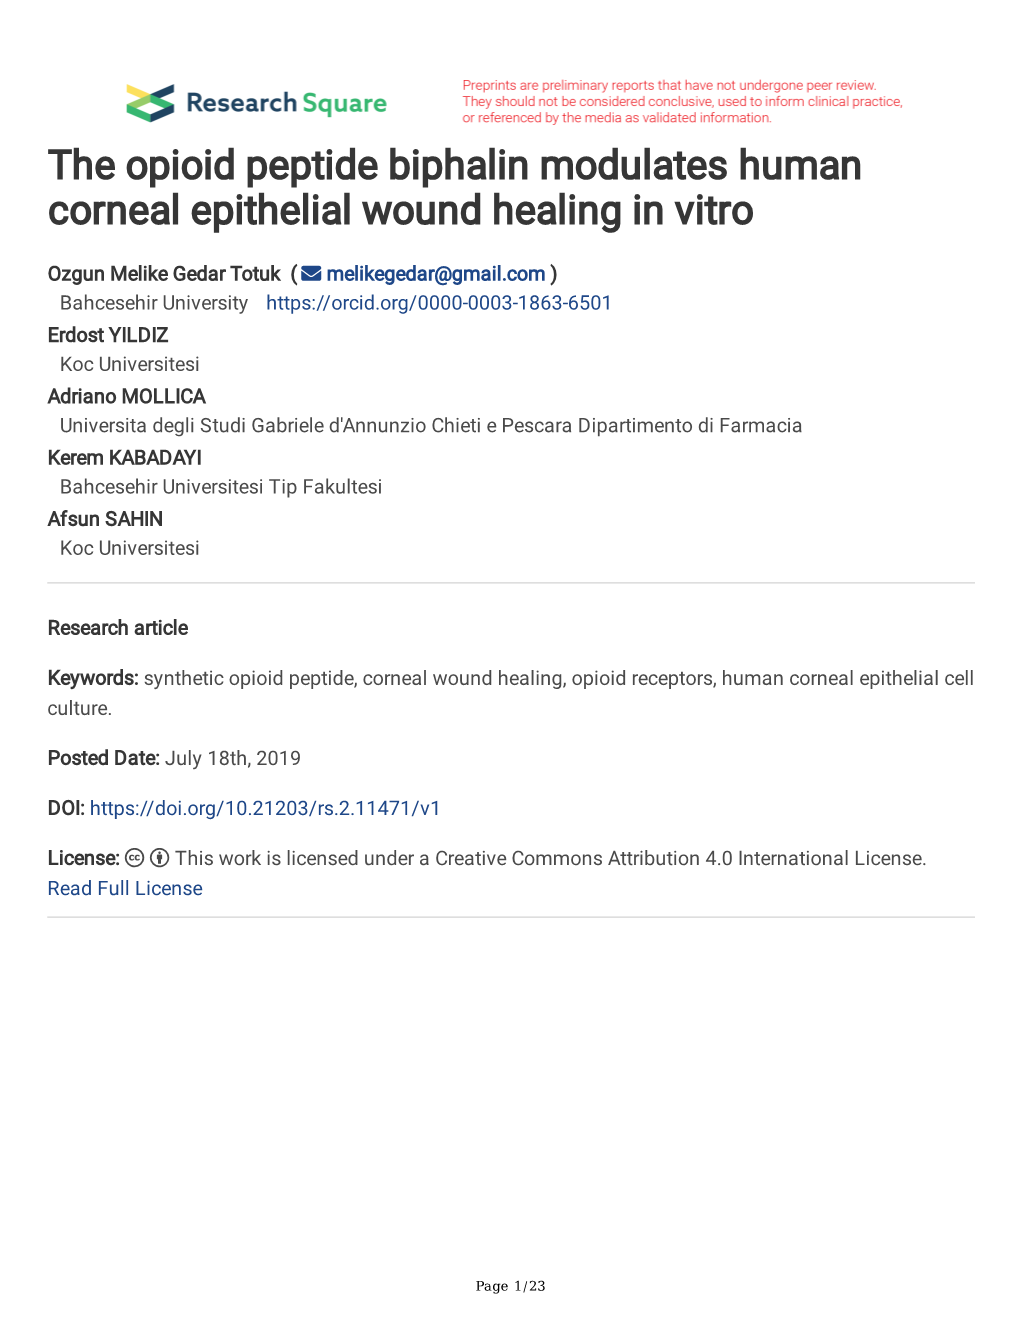 The Opioid Peptide Biphalin Modulates Human Corneal Epithelial Wound Healing in Vitro